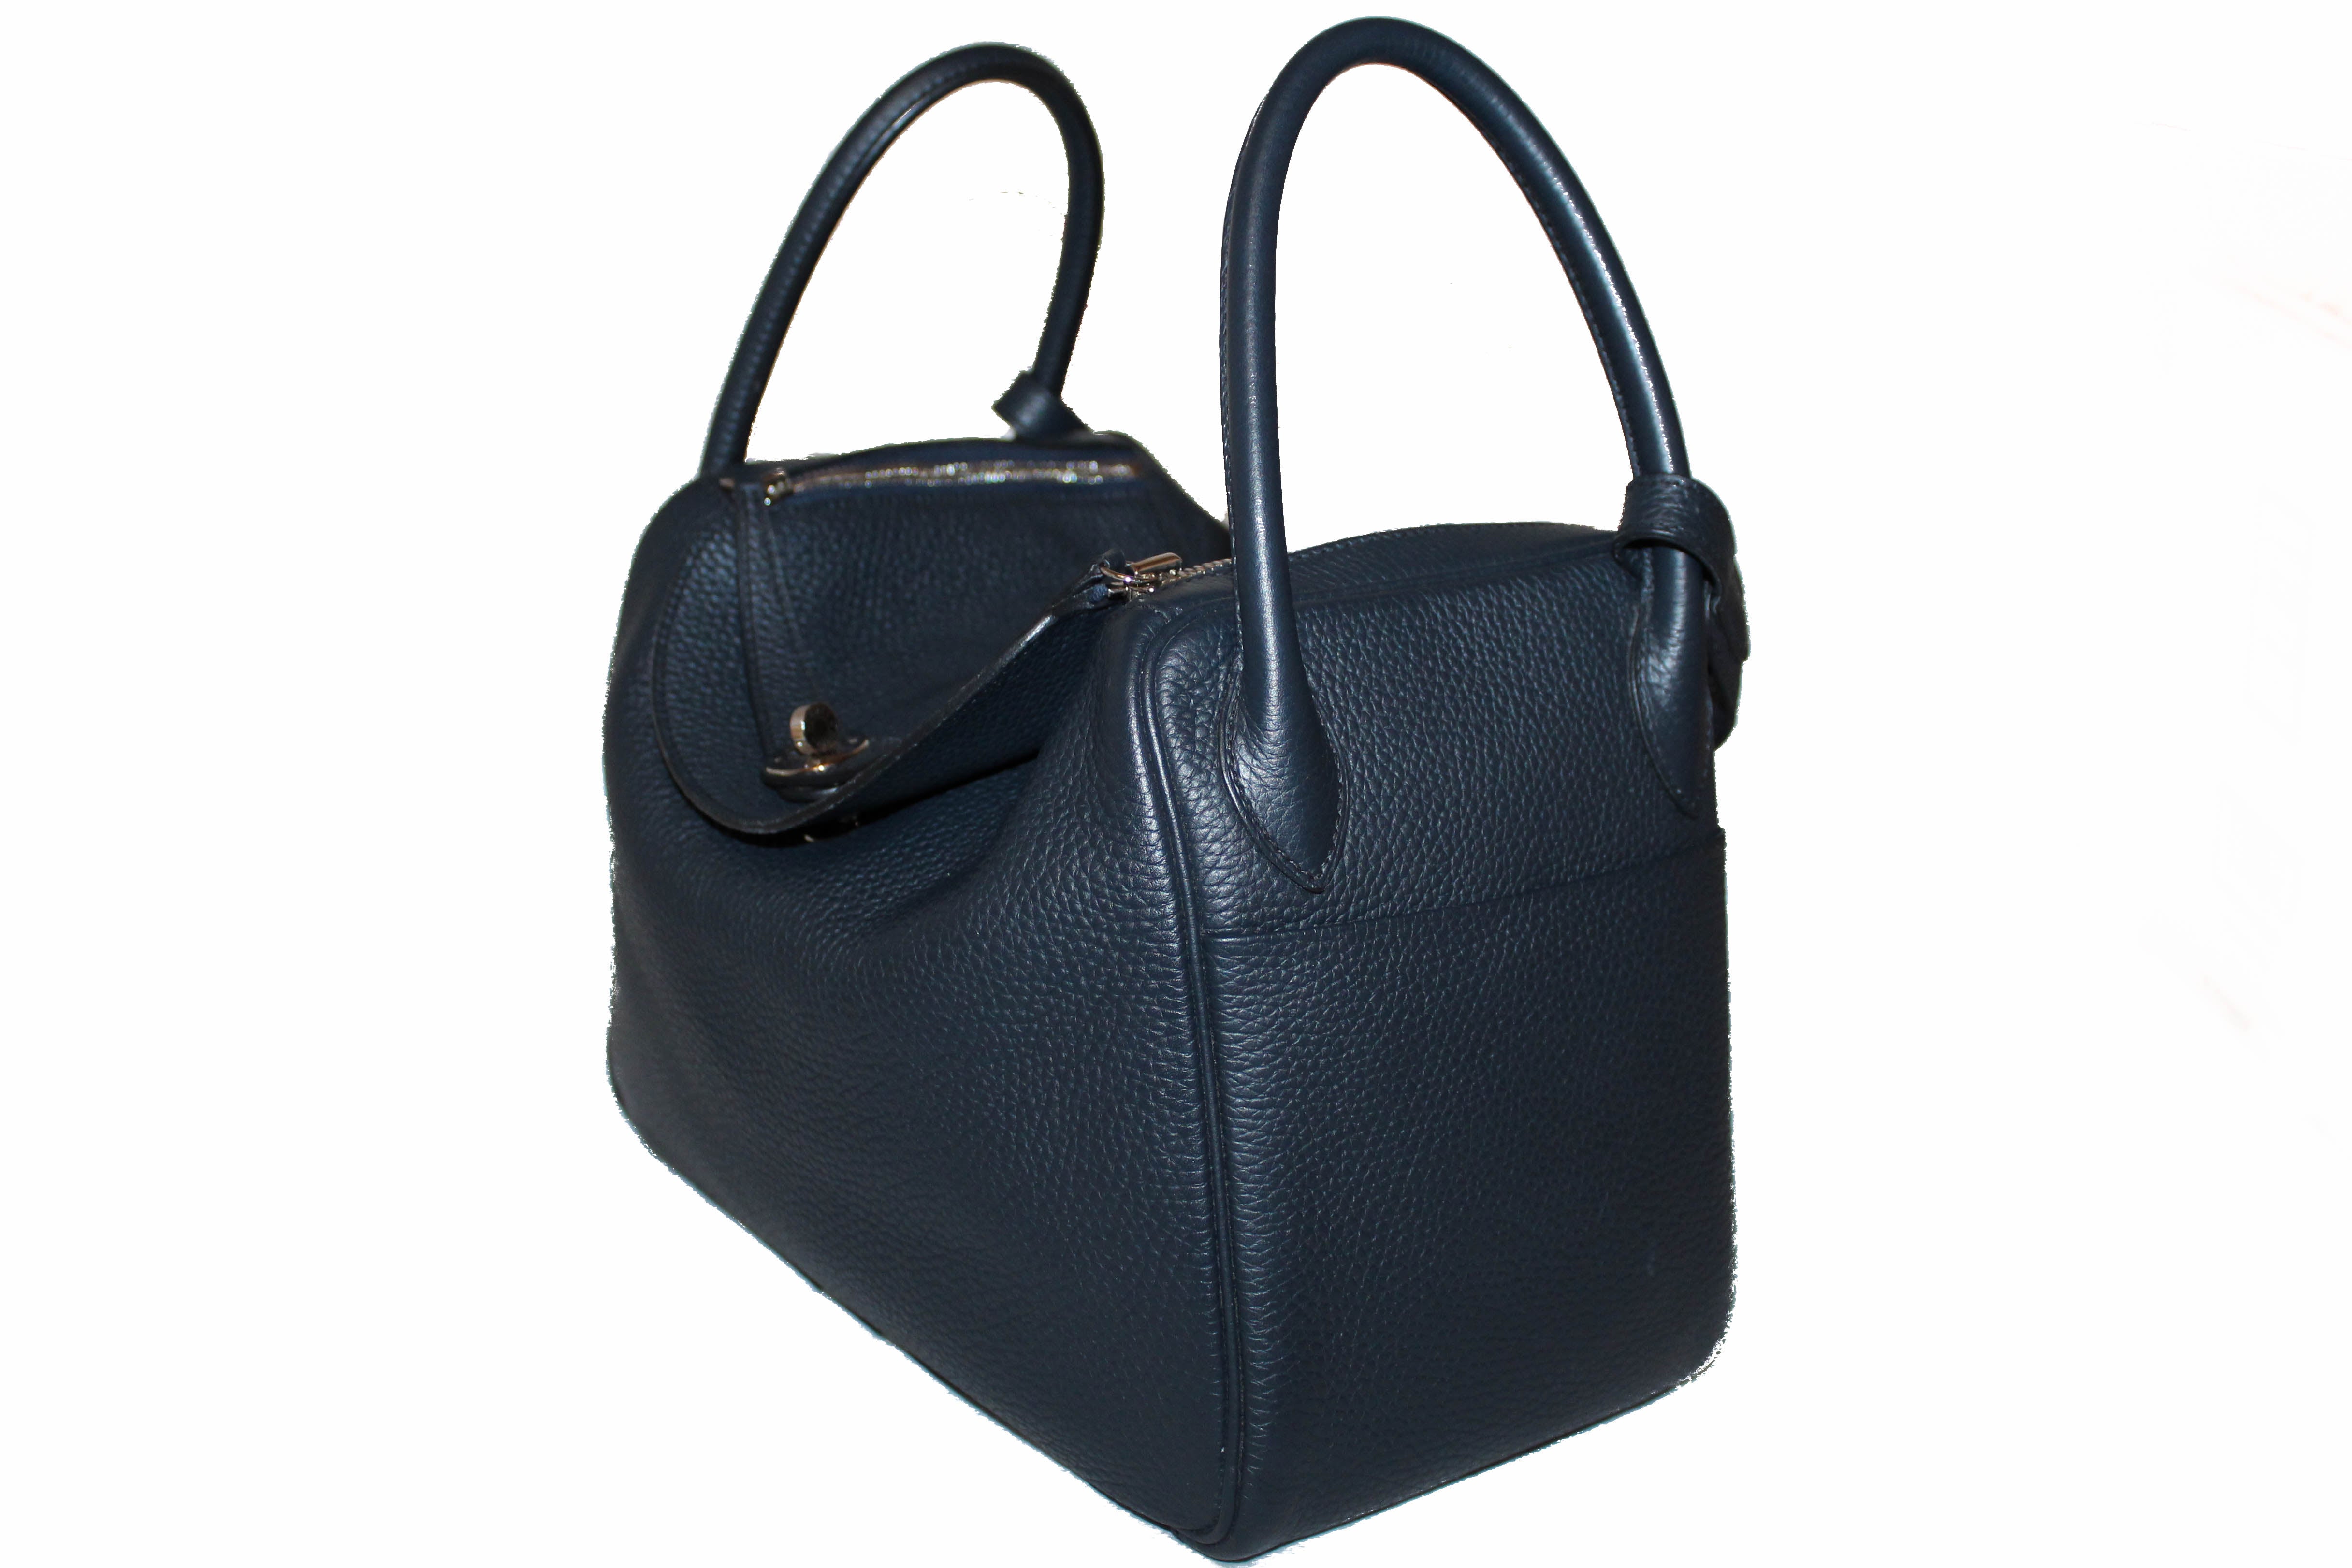 Authentic Hermes Bleu Indigo Togo Leather Lindy 30 Handbag